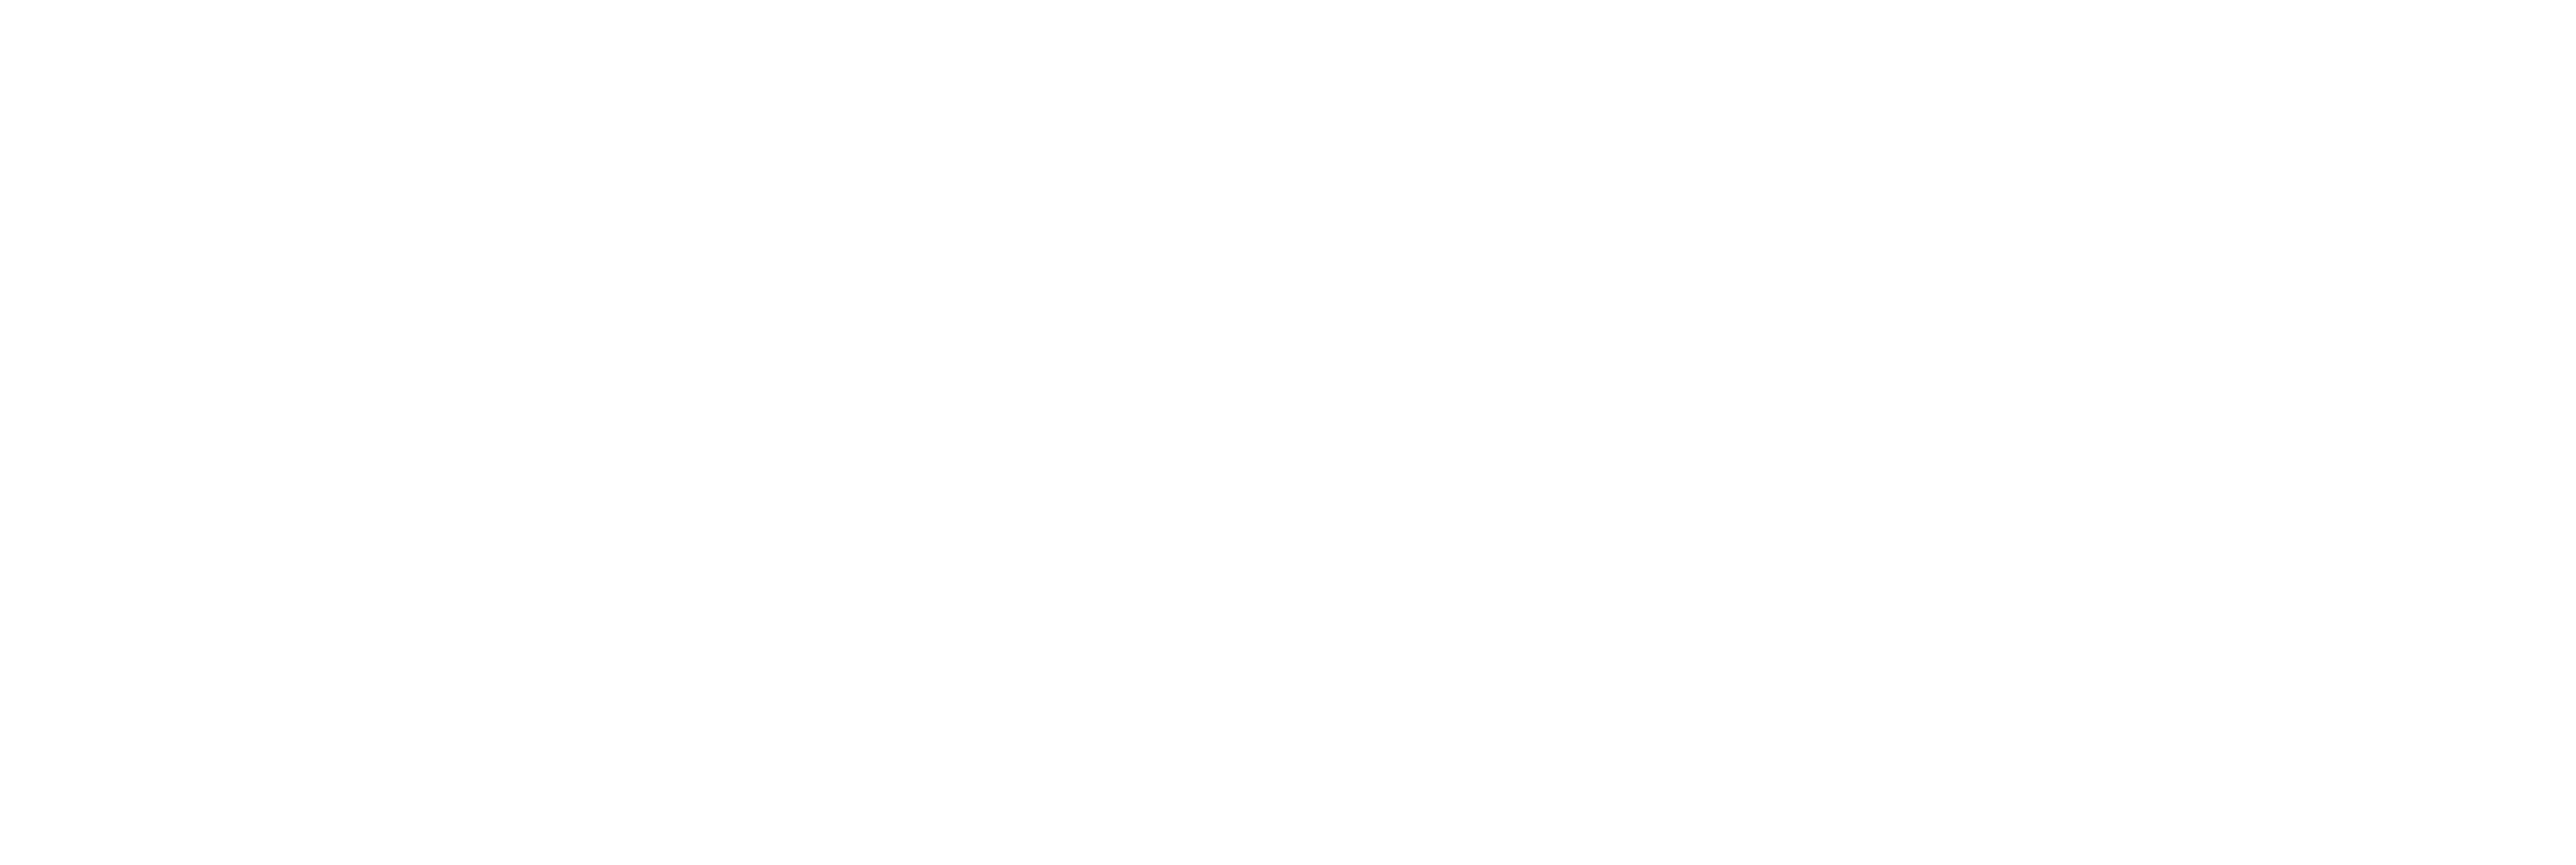 mustang-Sunglass-Highlights-headline